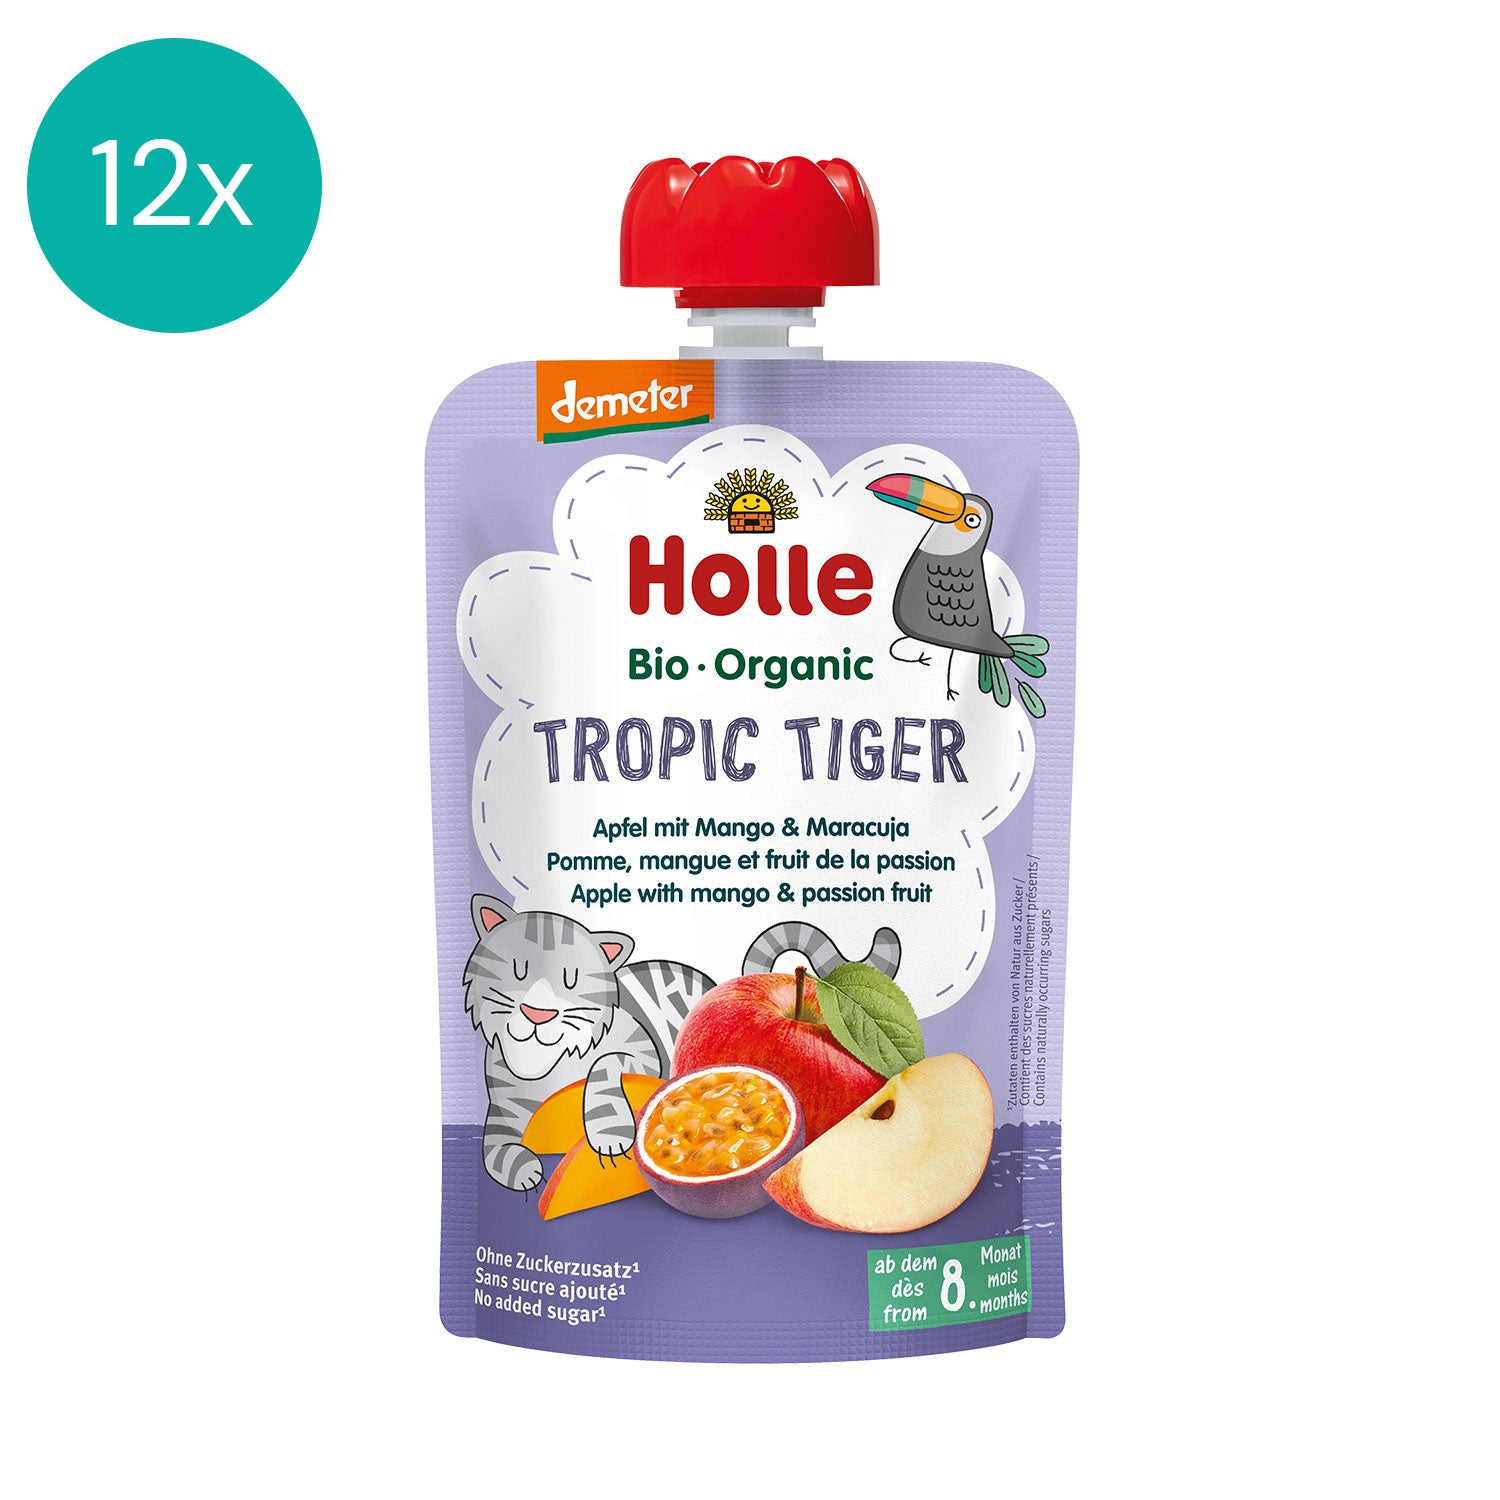 Holle Organic Tropic Tiger Apple Mango Passion Fruit